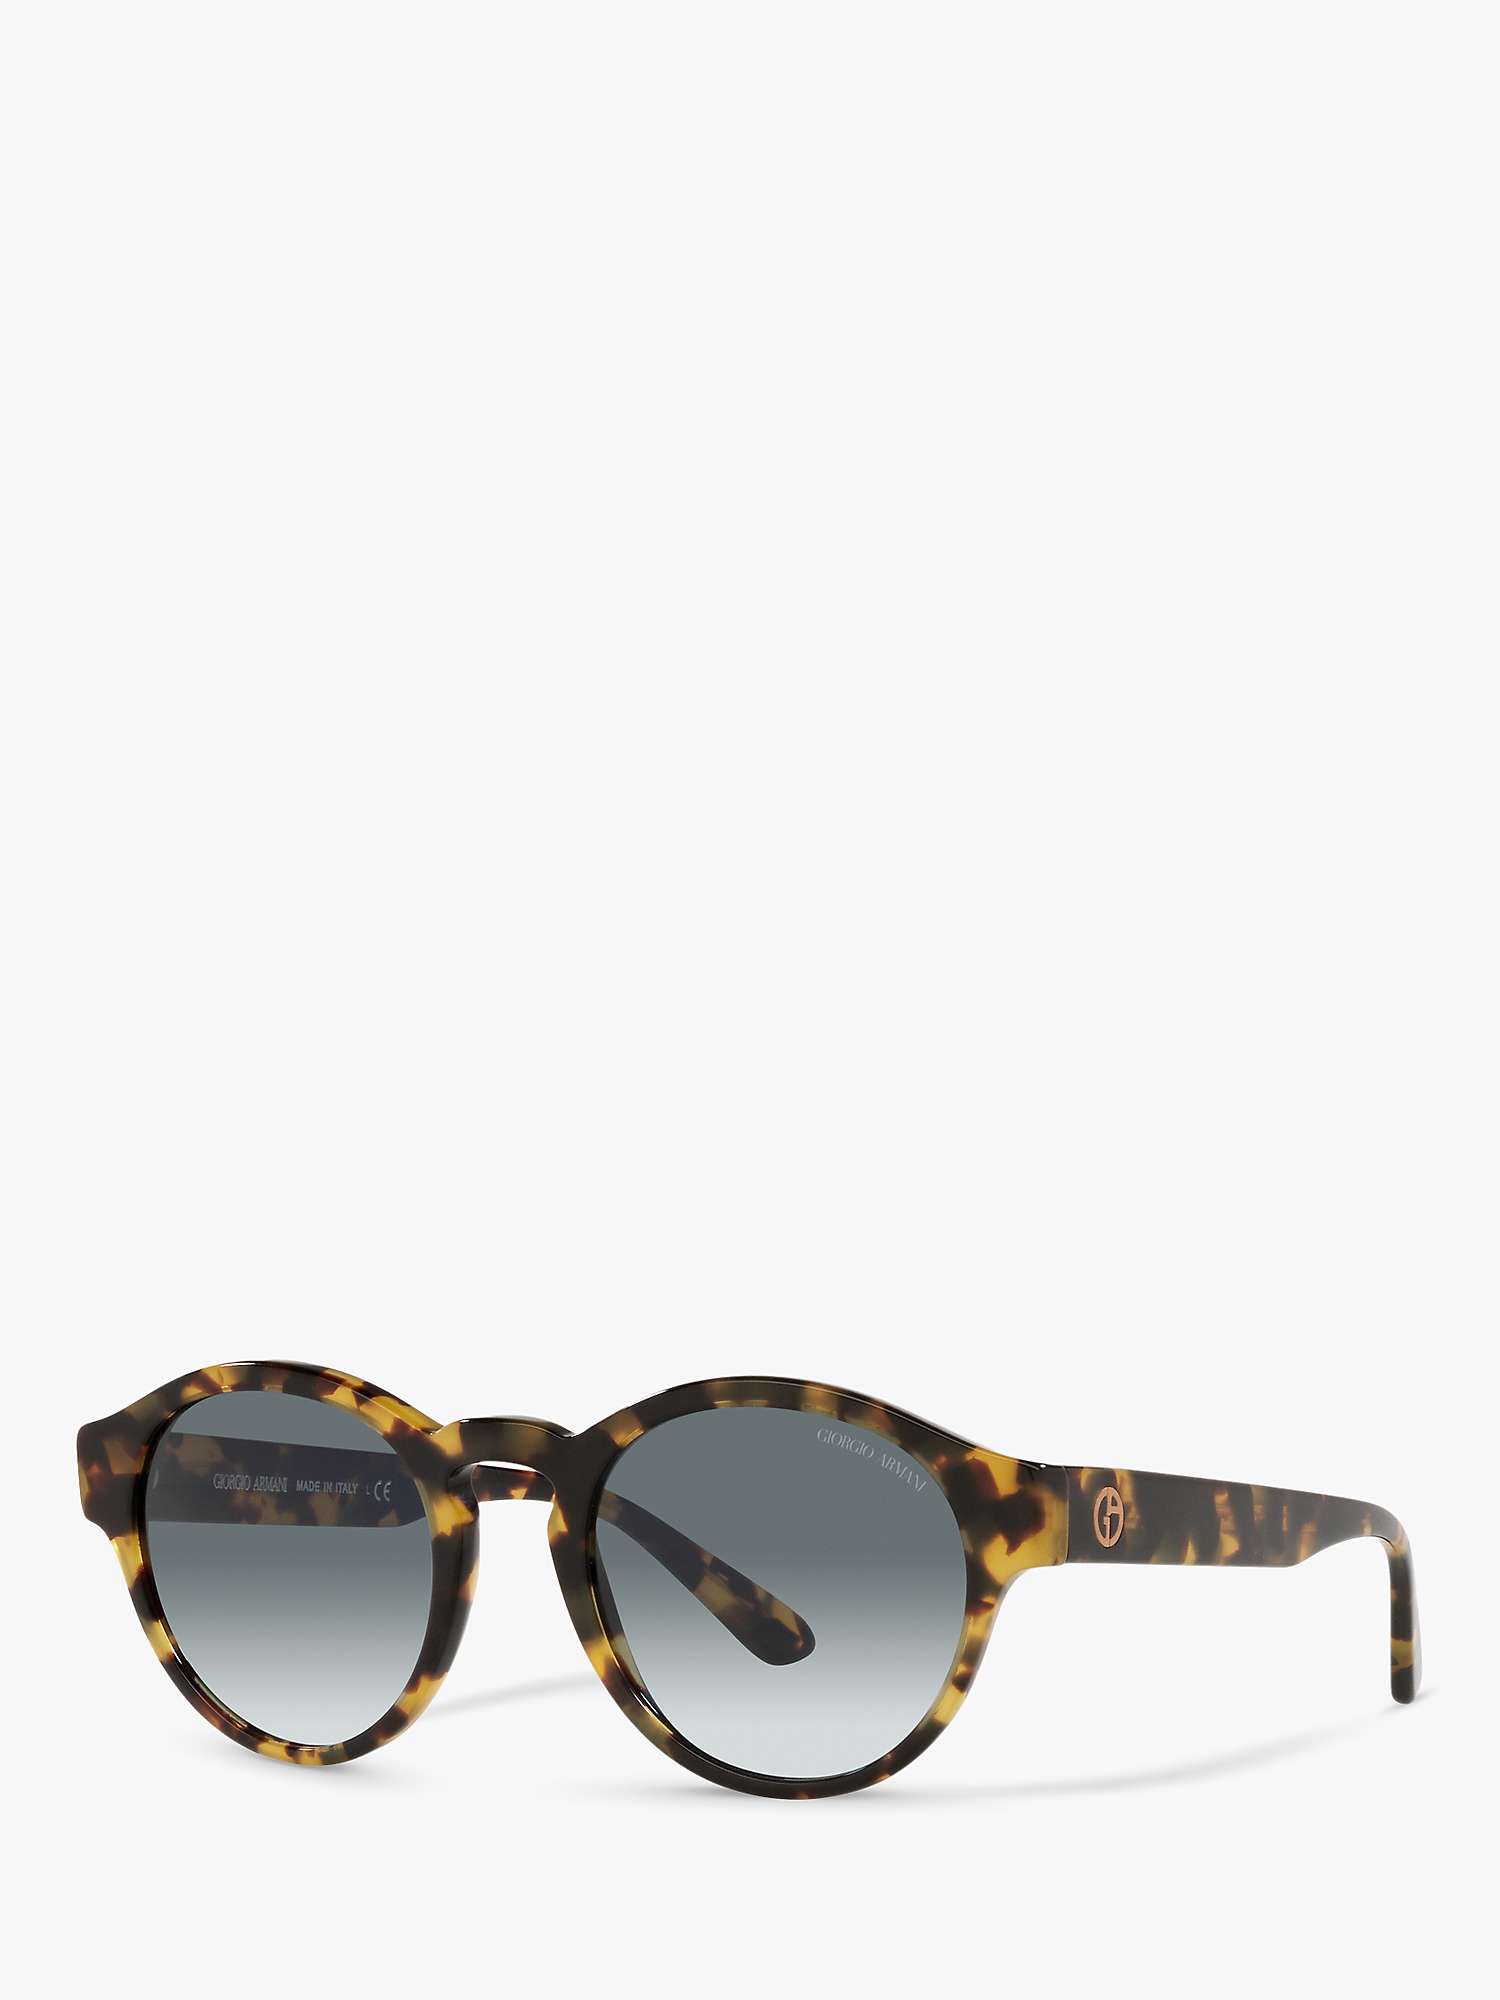 Buy Giorgio Armani AR8146 Women's Oval Sunglasses, Yellow Havana/Grey Gradient Online at johnlewis.com